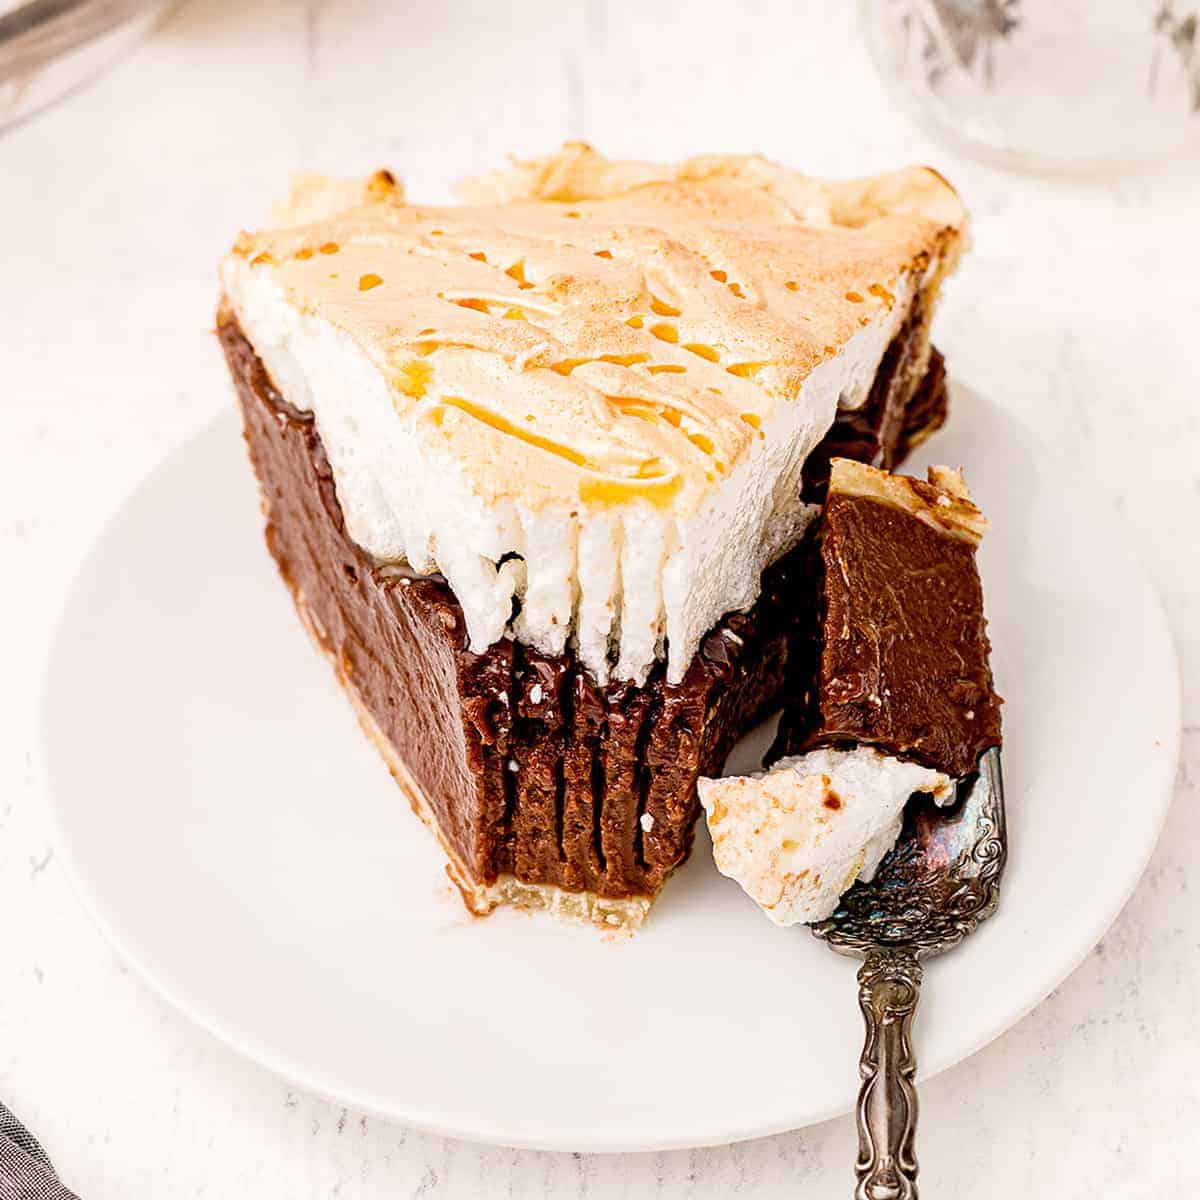 Old Fashioned Homemade Chocolate Meringue Pie - best chocolate dessert recipes